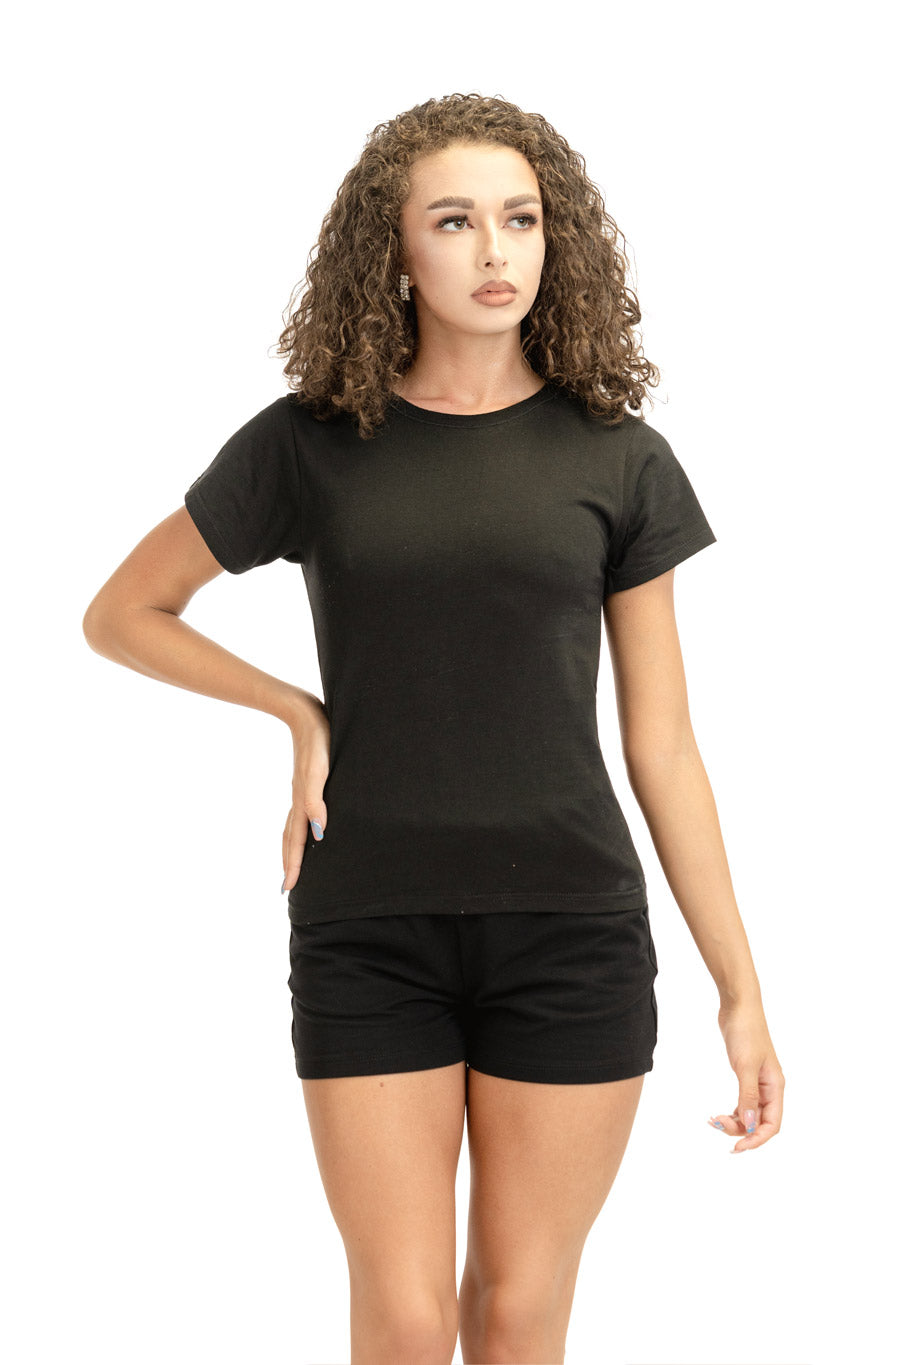 BASIC BLACK - tricou femei, model minimalist